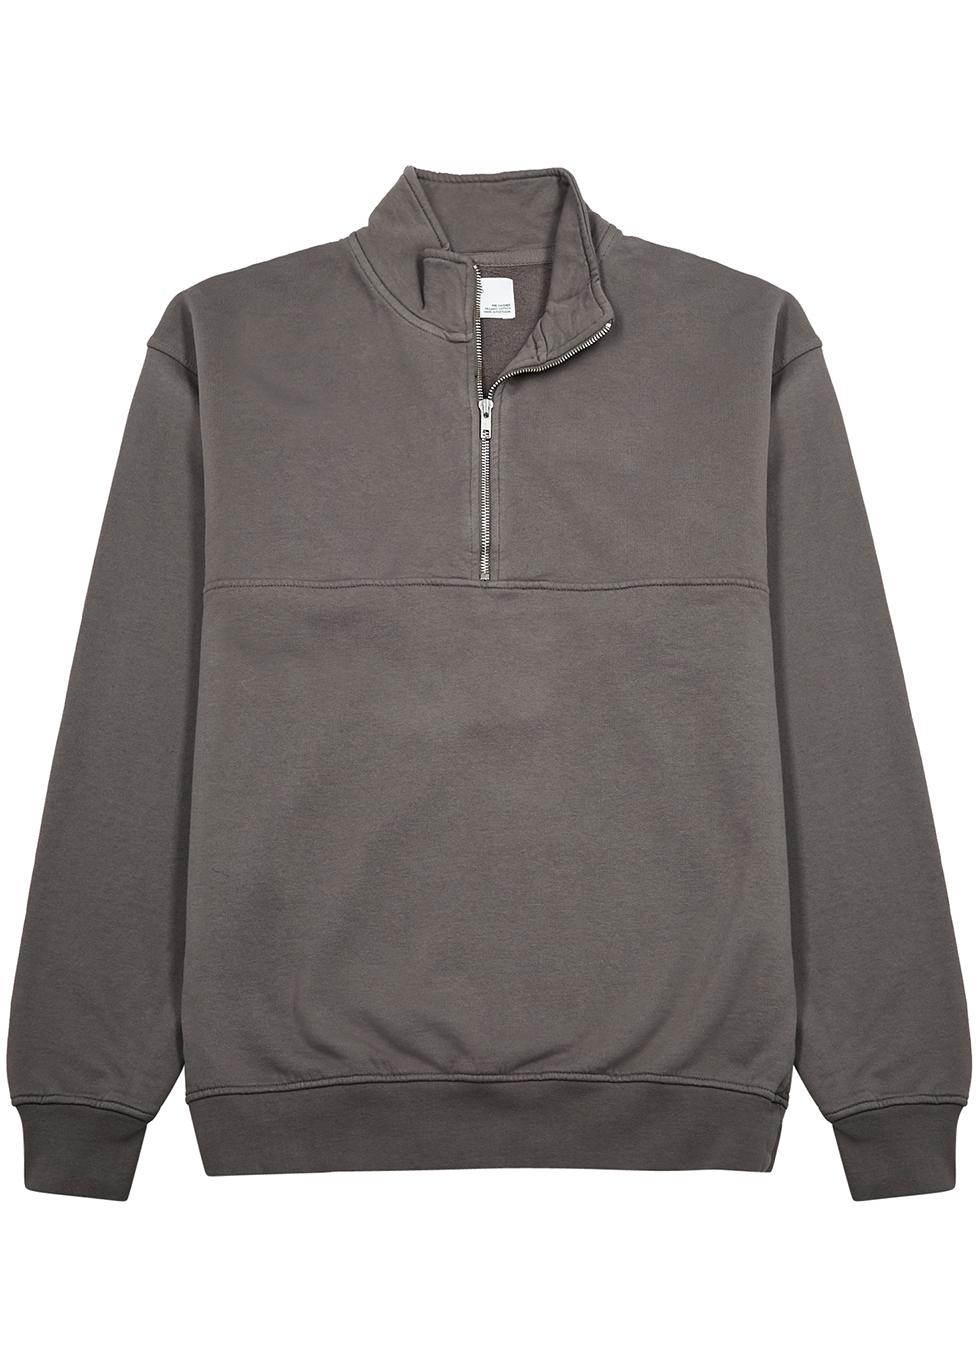 Grey half-zip cotton sweatshirt by COLORFUL STANDARD